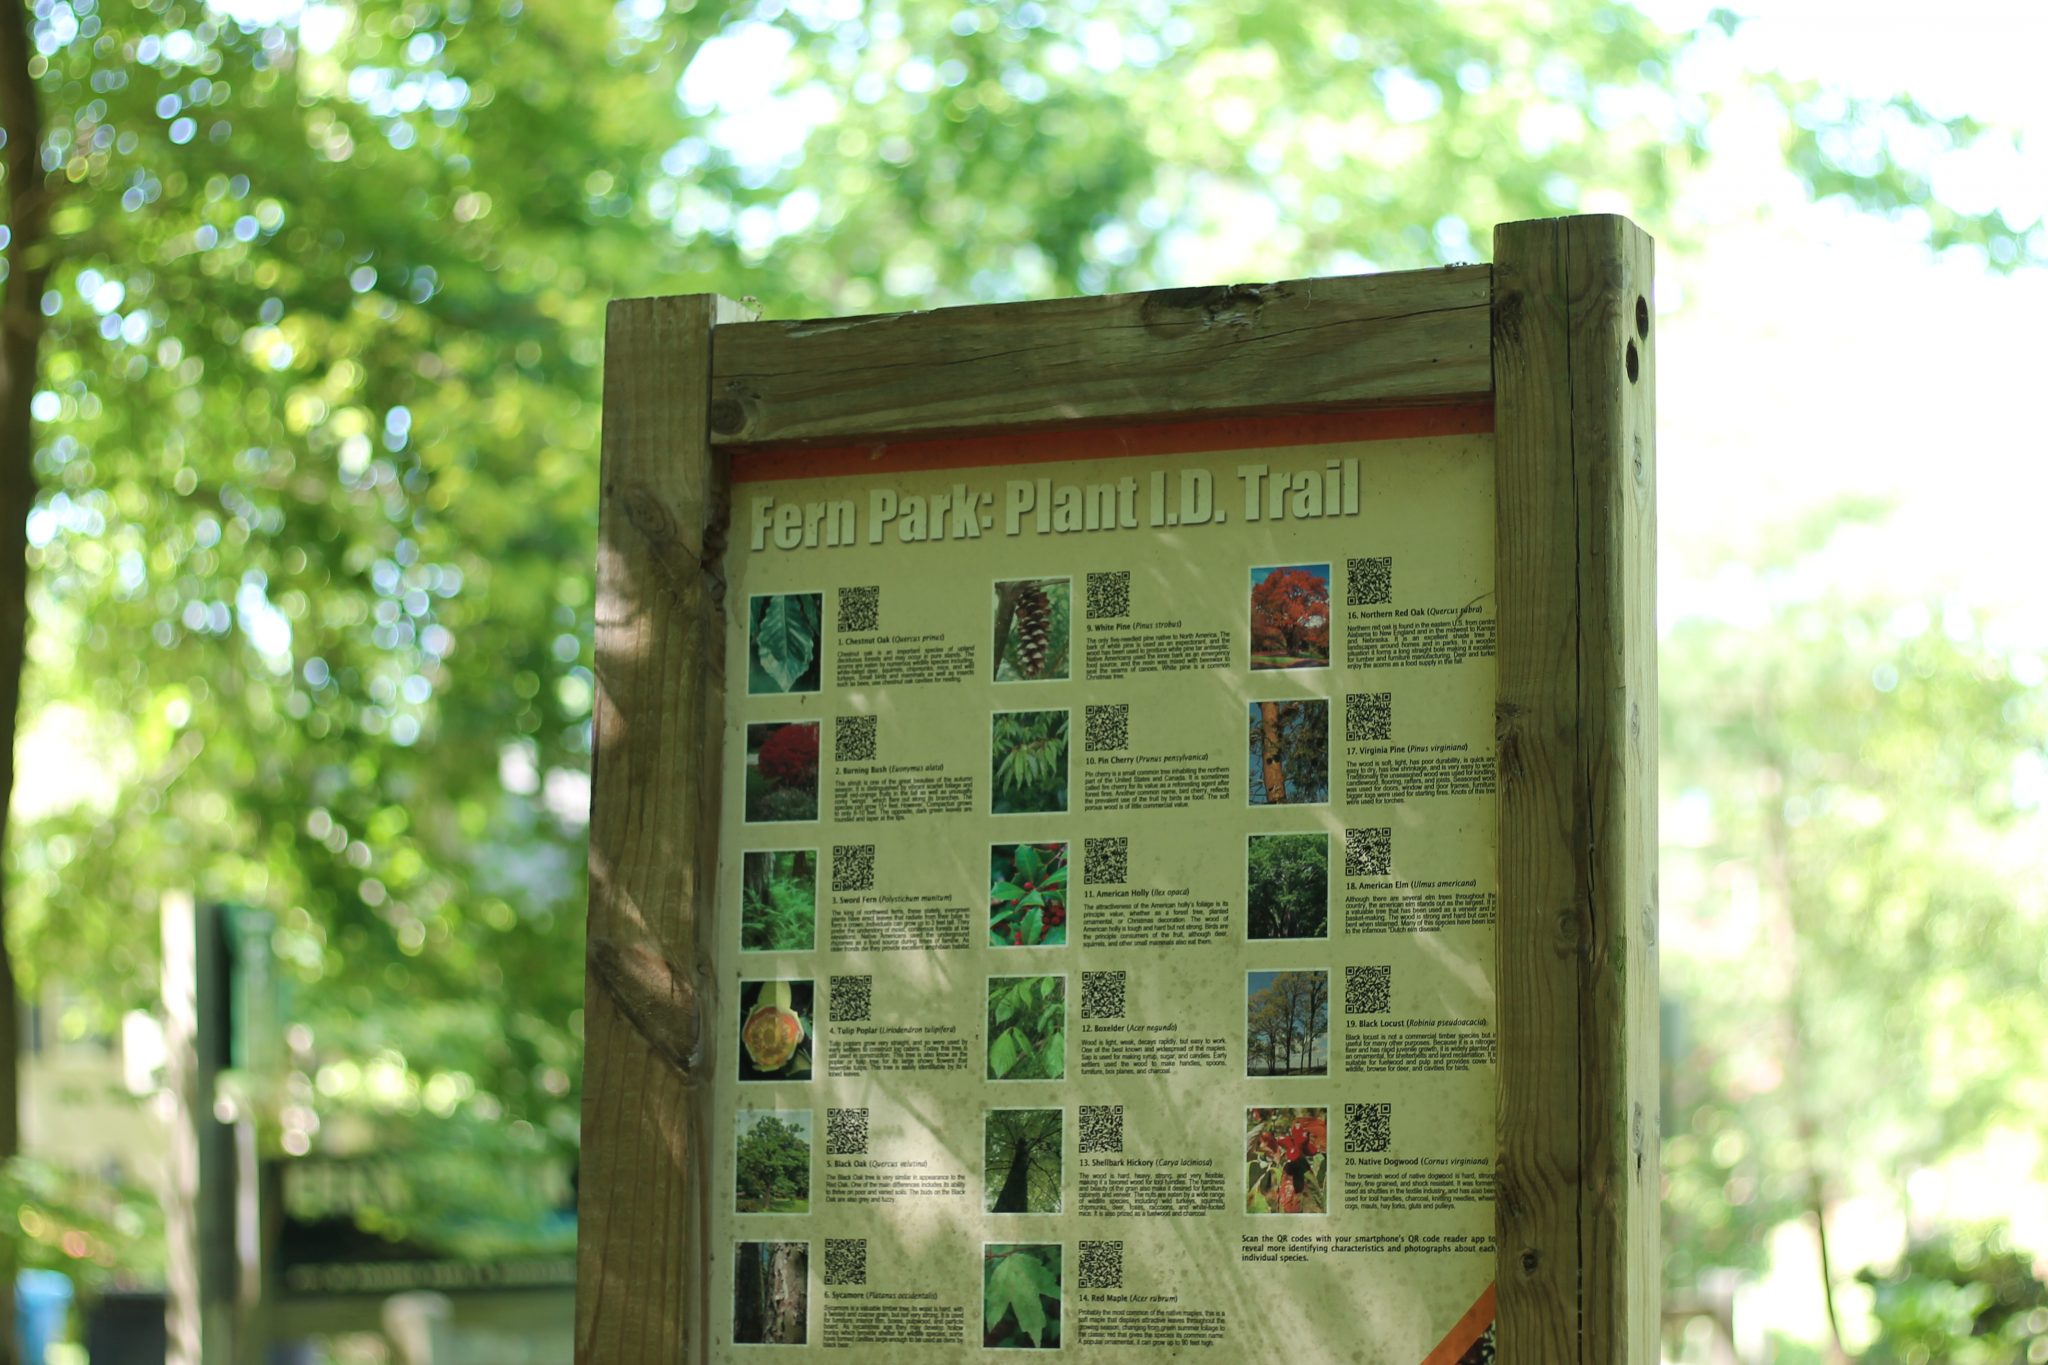 Fern Park plant identification trail sign